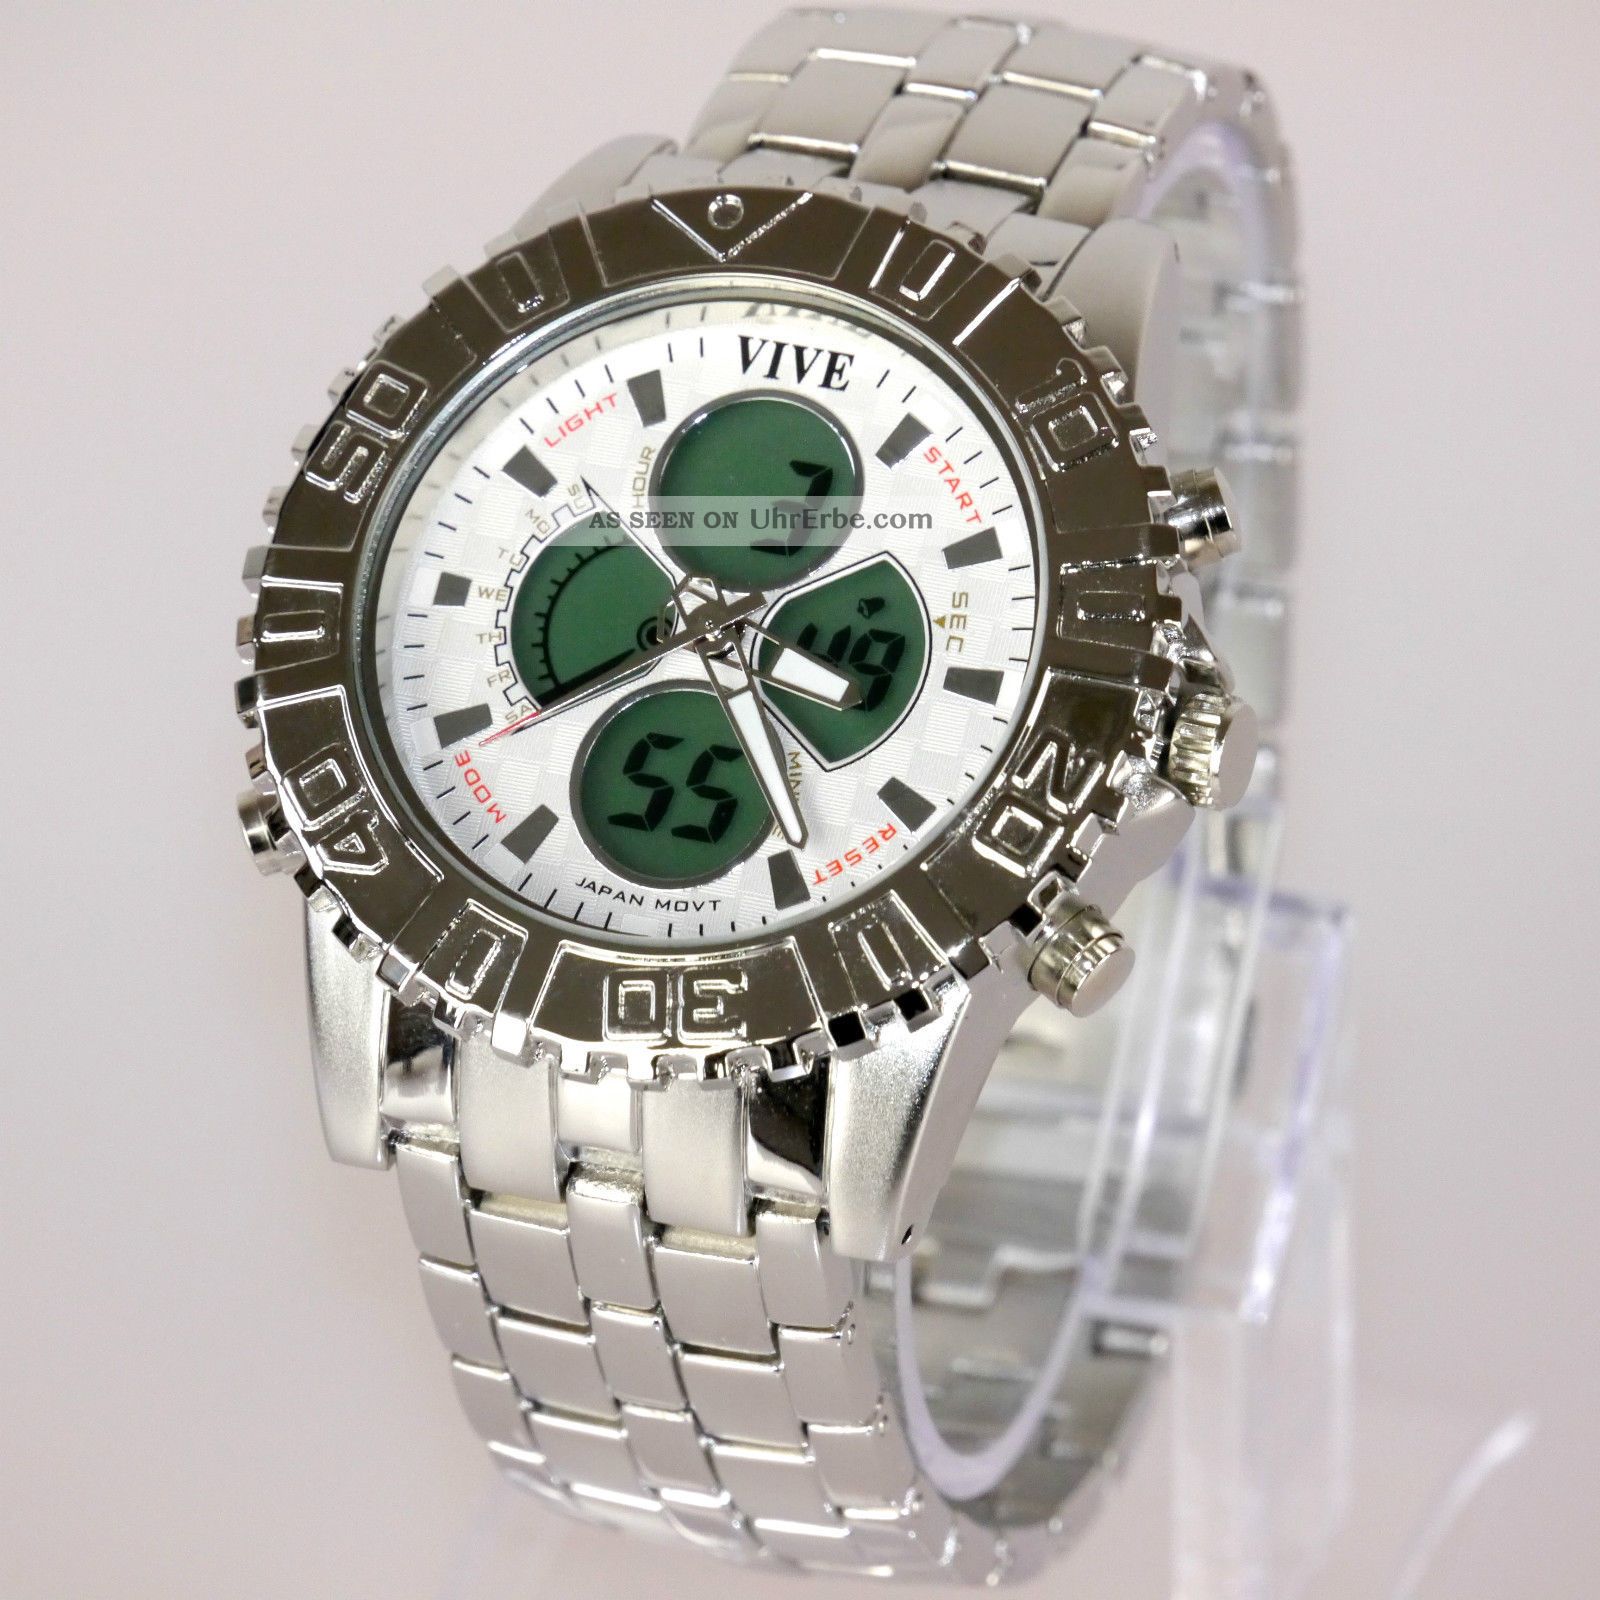 Herren Vive Xxl Armband Uhr Edelstahl Silber Watch Analog Digital Quarz 13 Armbanduhren Bild